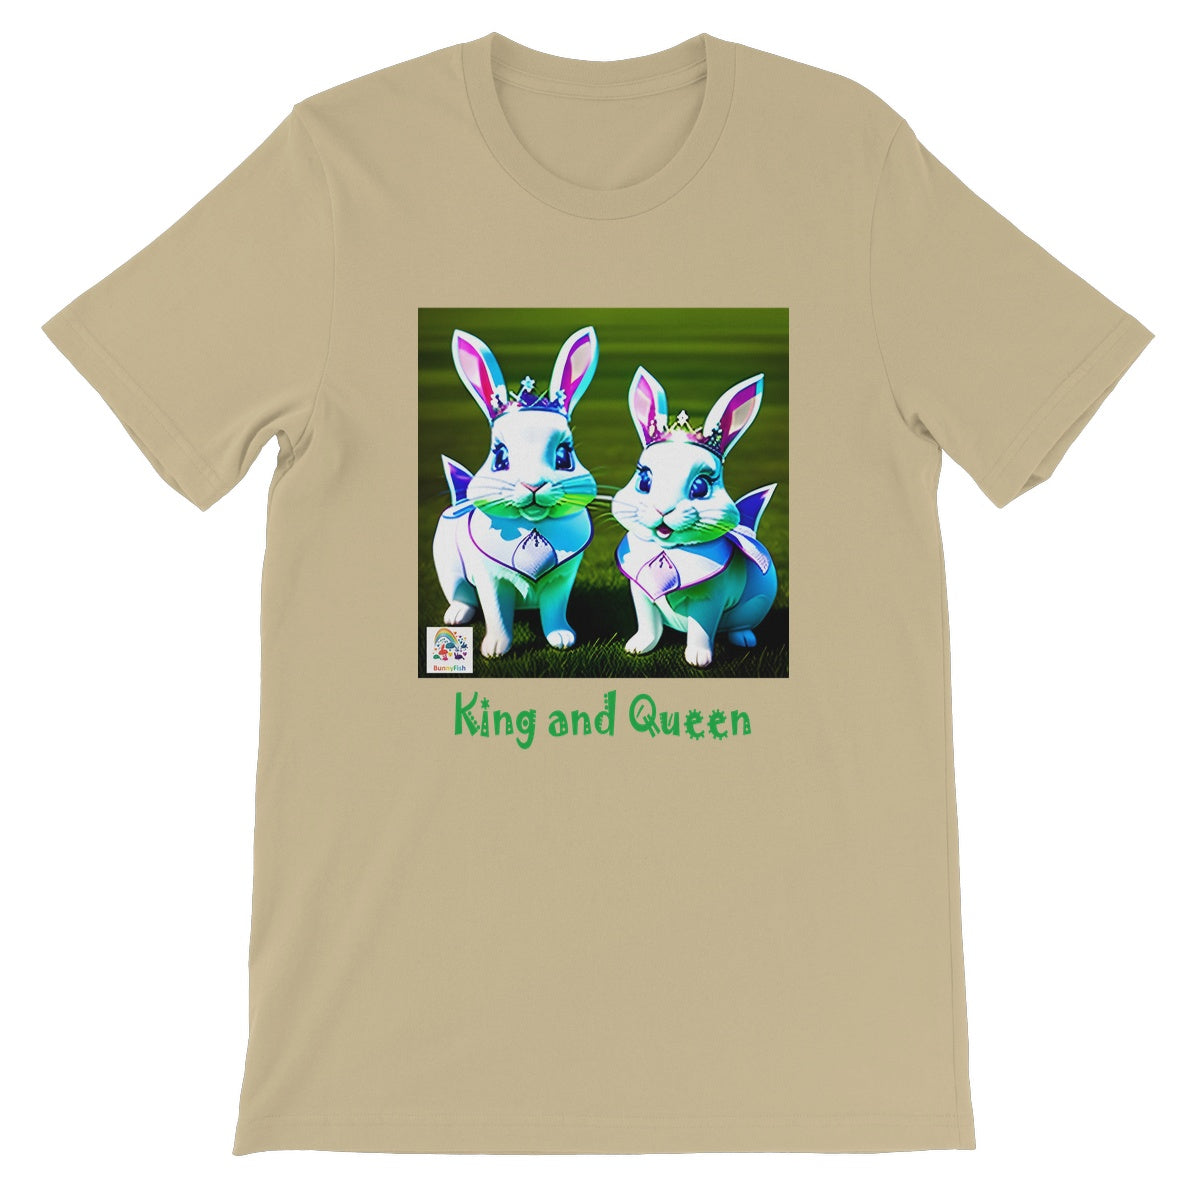 King and Queen Grownups' T-Shirt